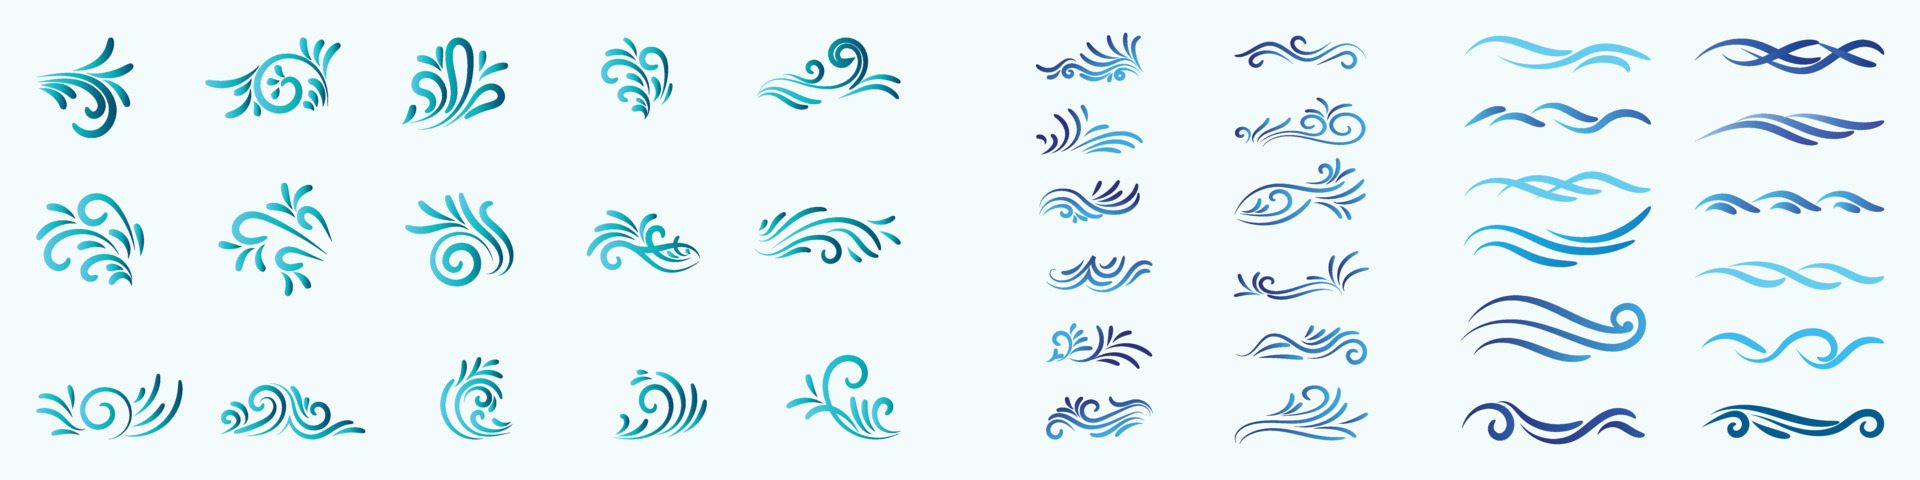 Sea Waves Black Glyph Doodle Set. Ocean Water Wave Hand Drawn Design  Element. Sketch Marine Symbol, Surfing Decoration. Curly Waves And Spirals,  Foam On Crest, Splash And Drop Vector Illustration Royalty Free